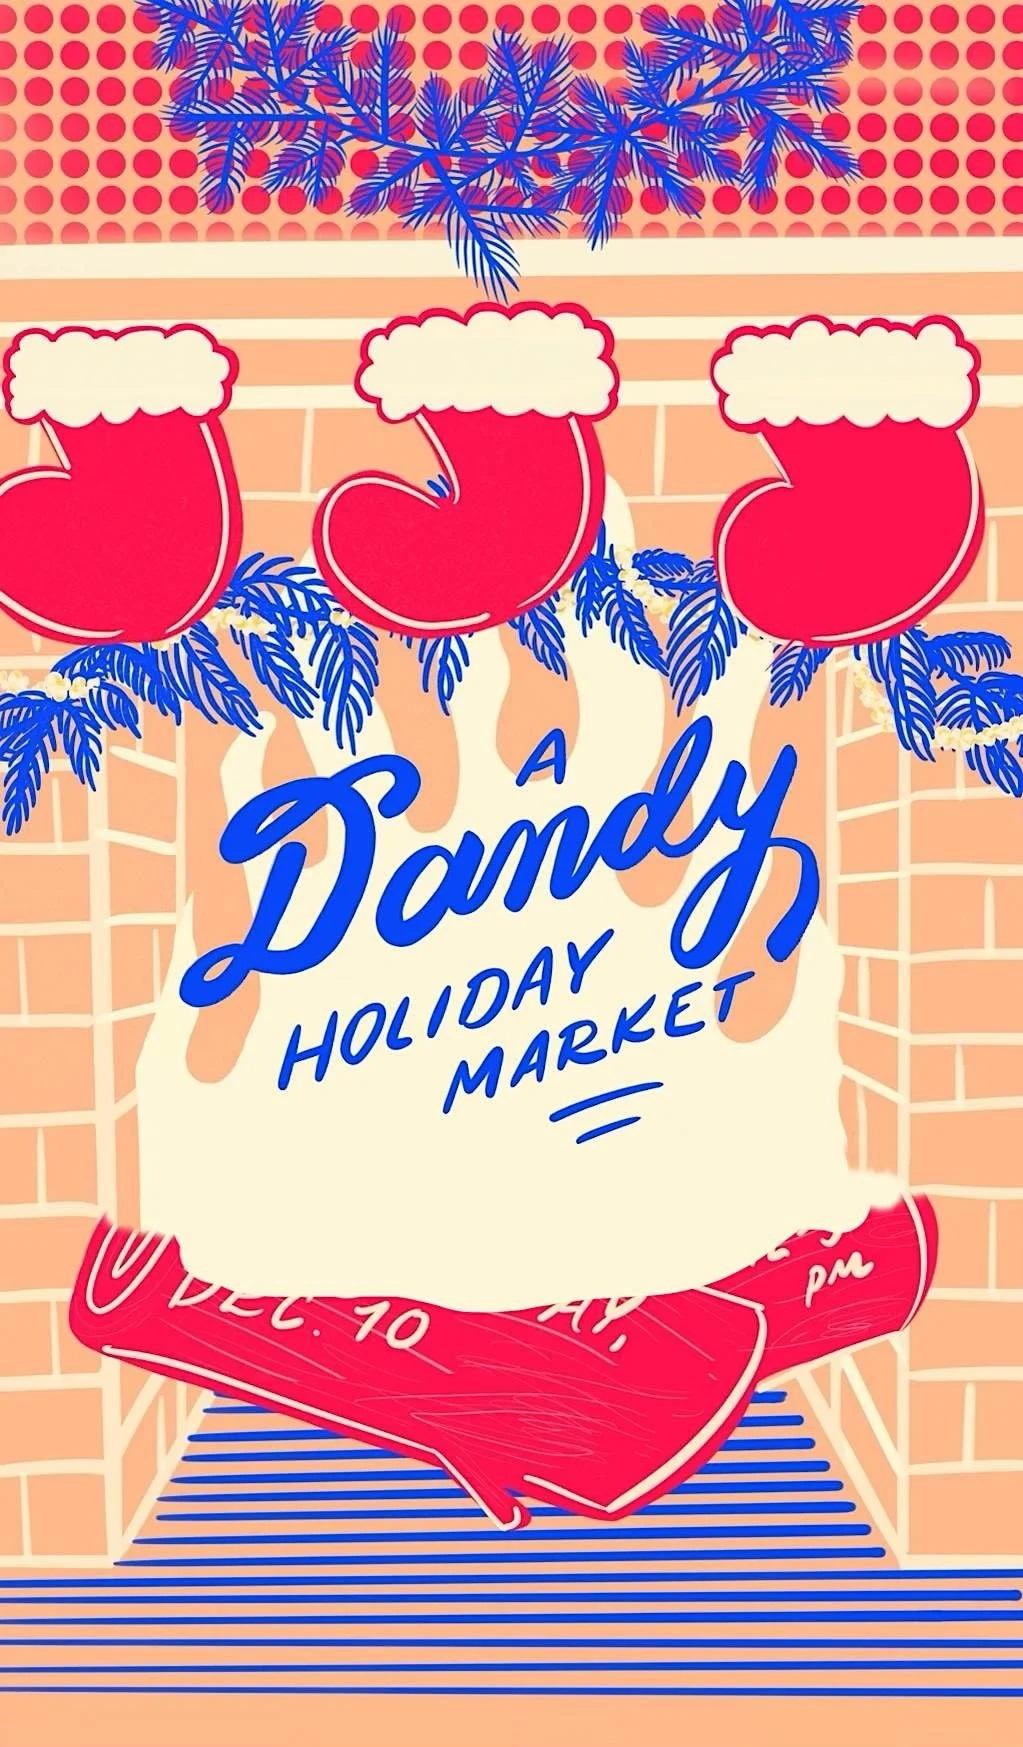 A Dandy Holiday Market